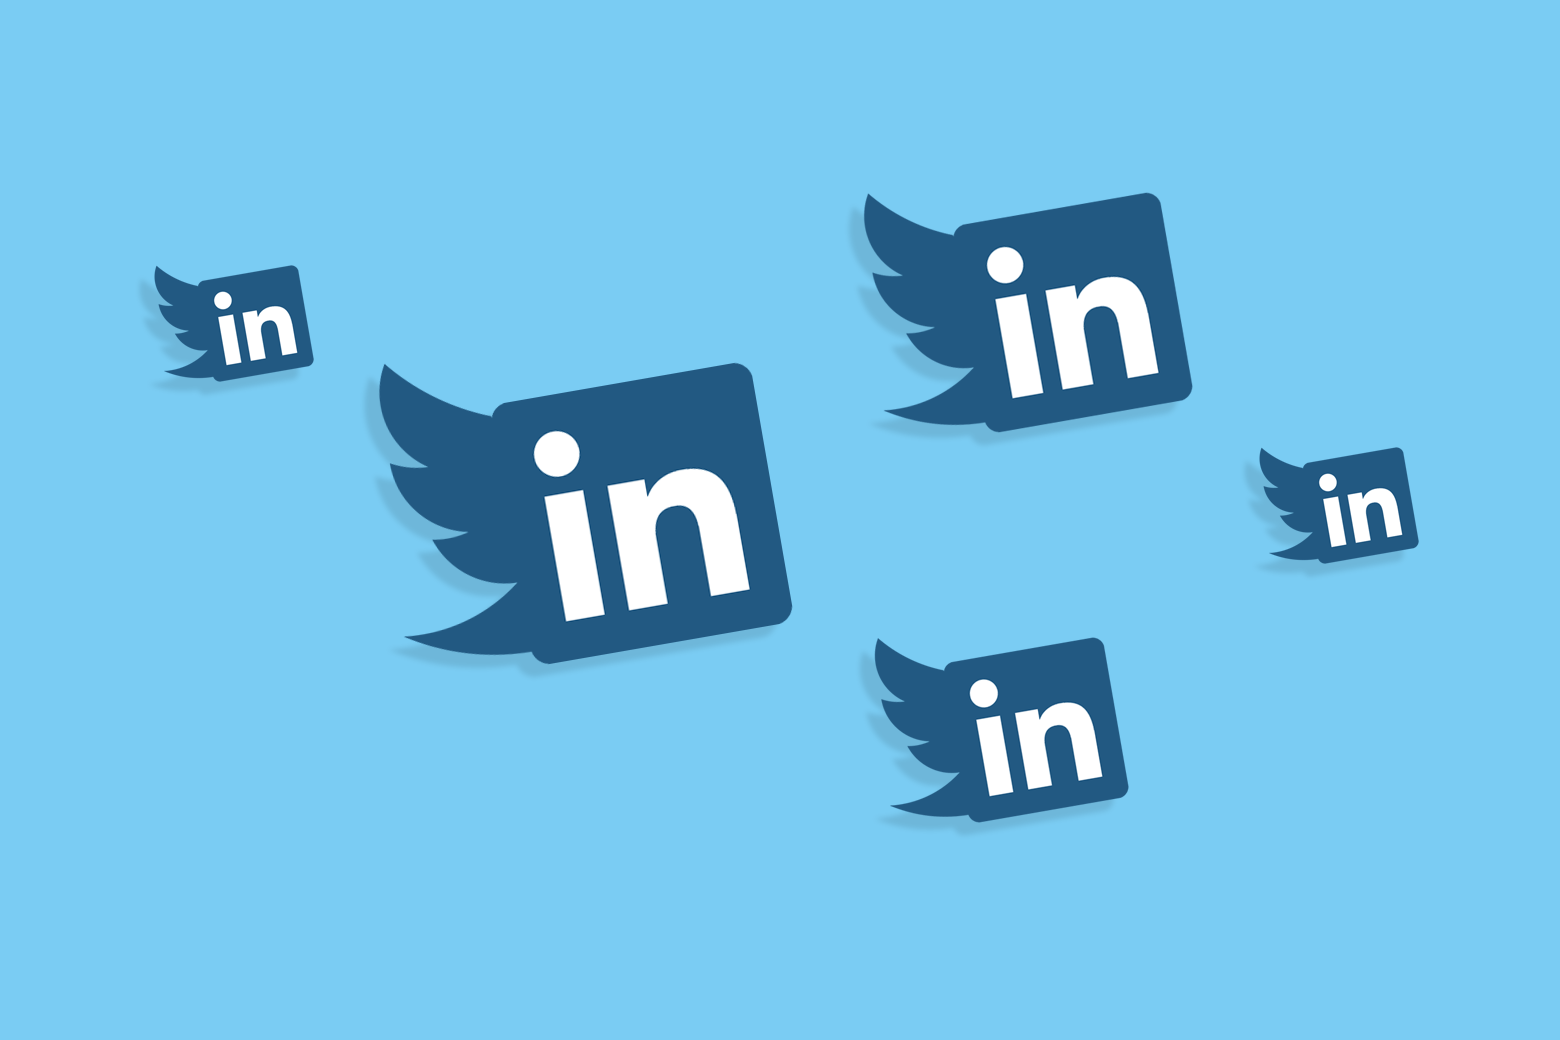 The LinkedIn logo is growing wings like the old Twitter bird logo's.